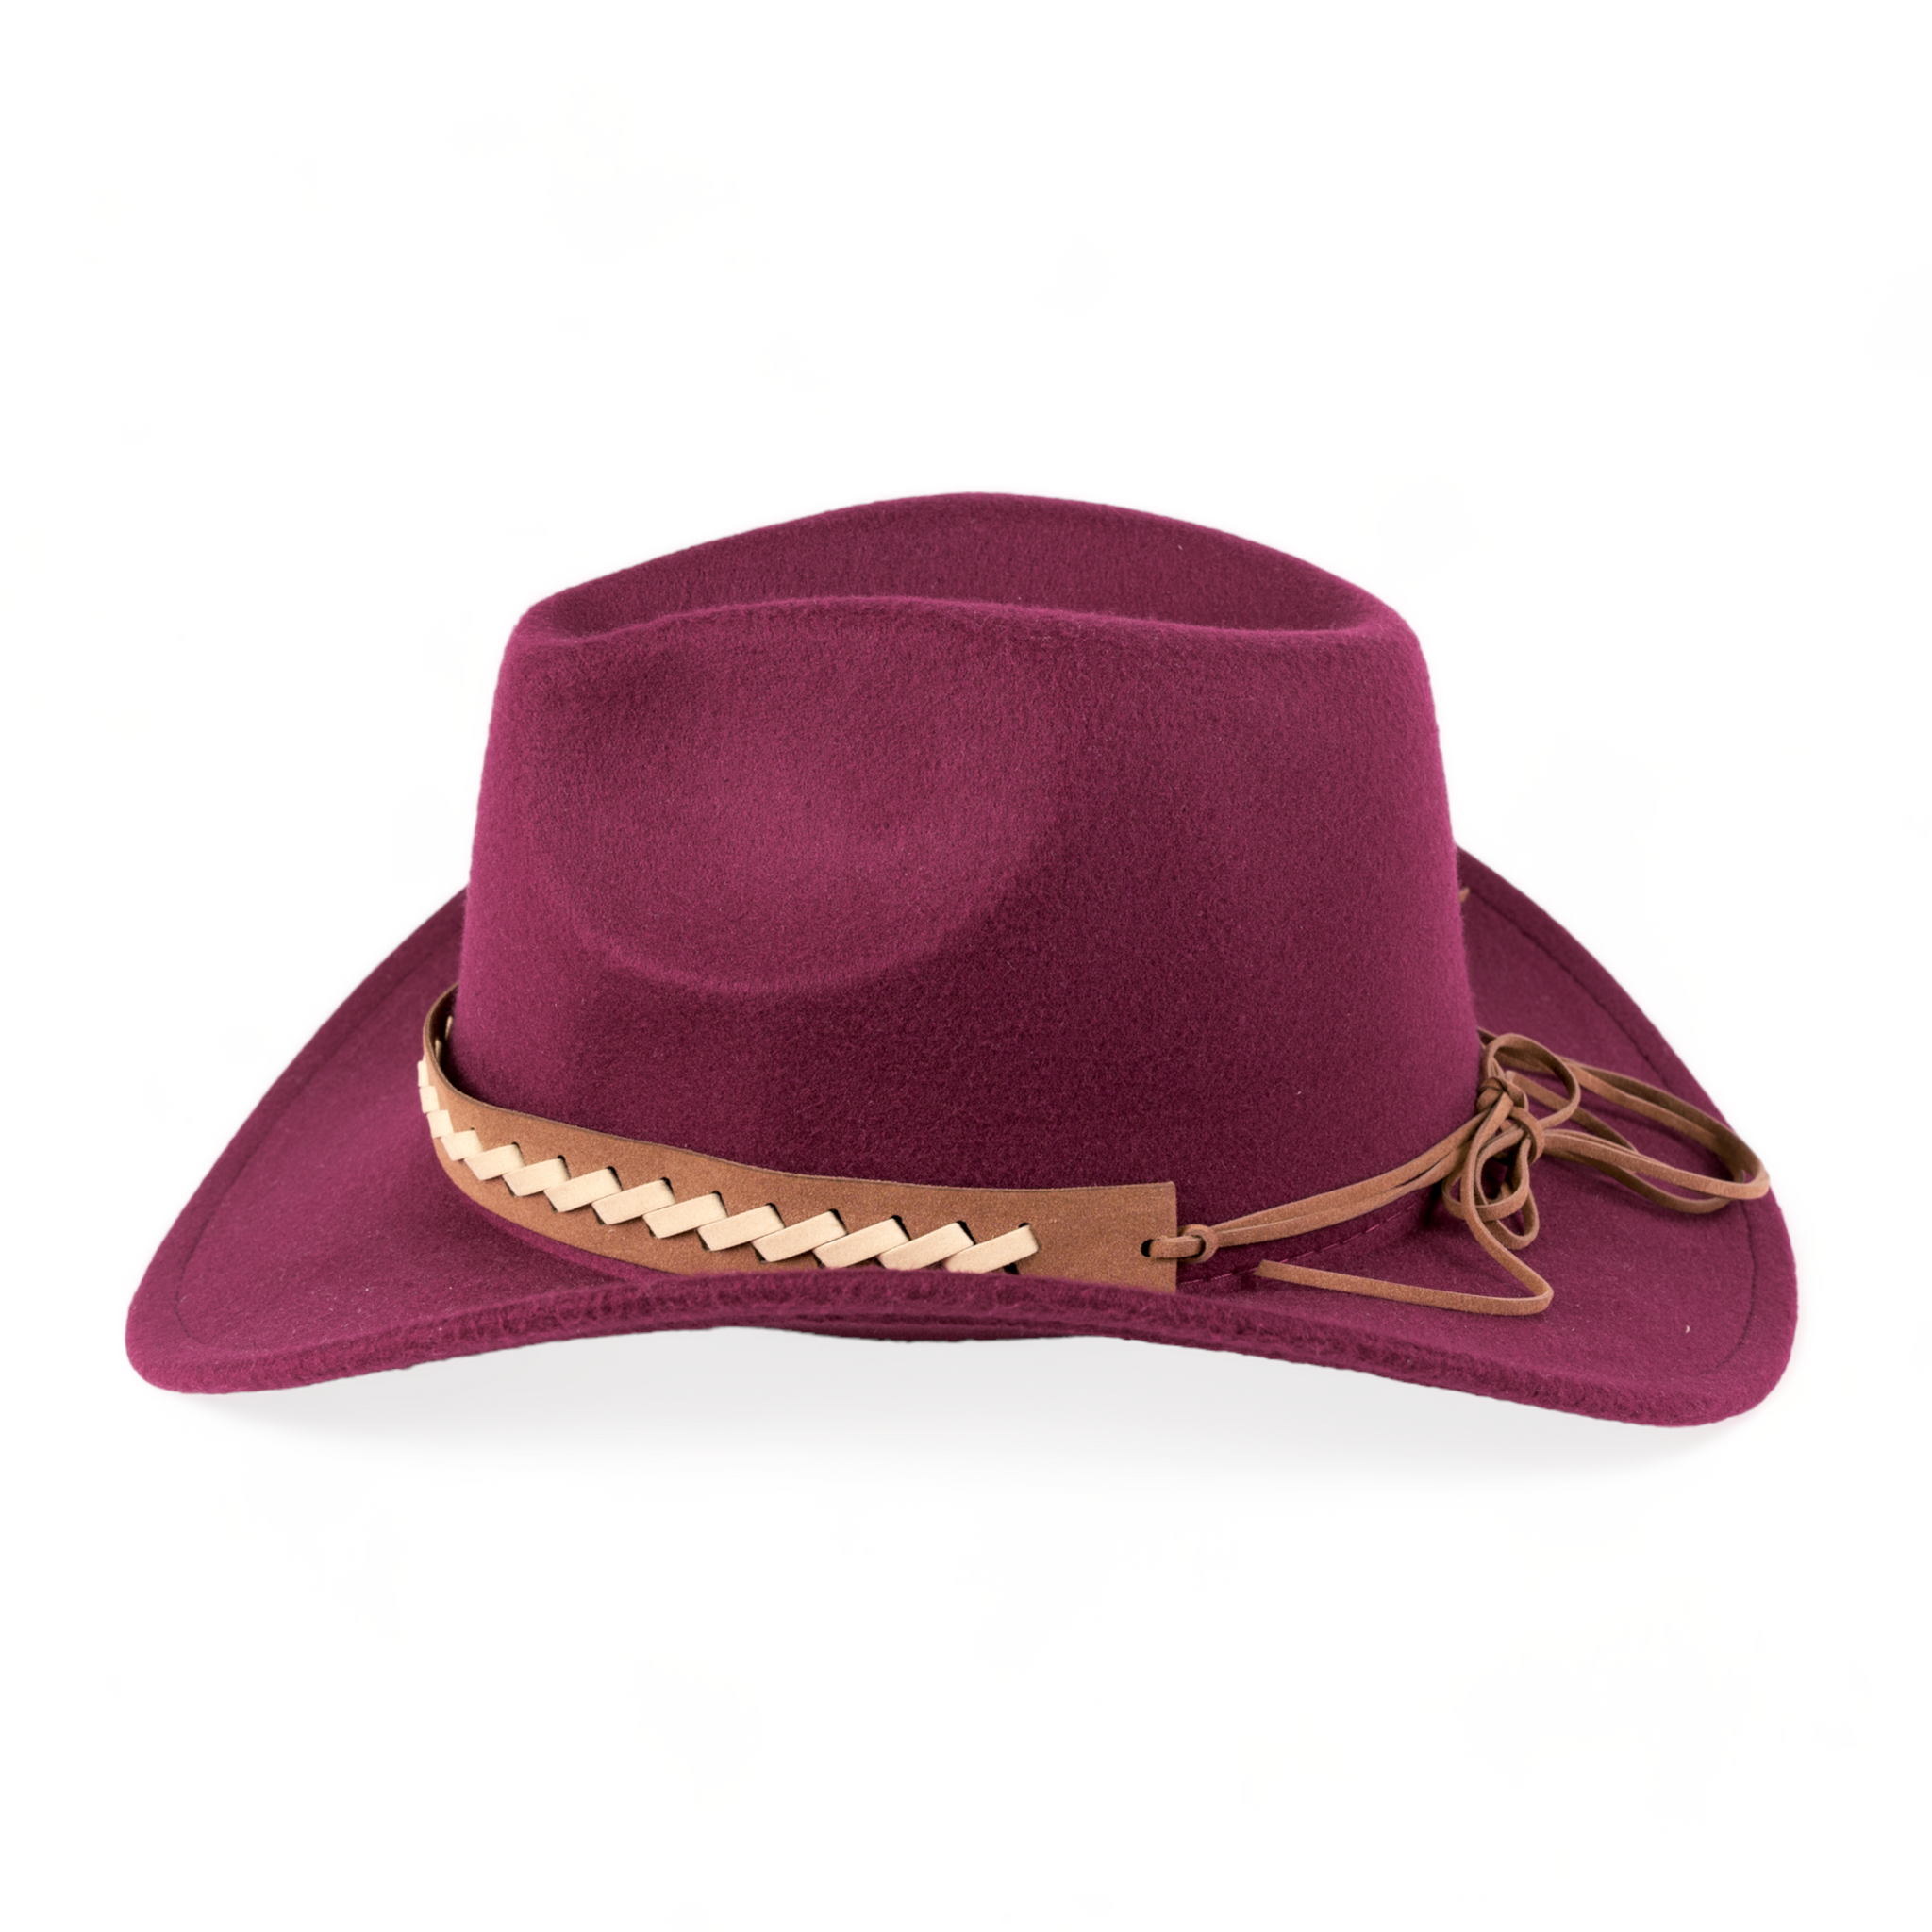 Chokore Cowboy Hat with Braided PU Belt (Burgundy)